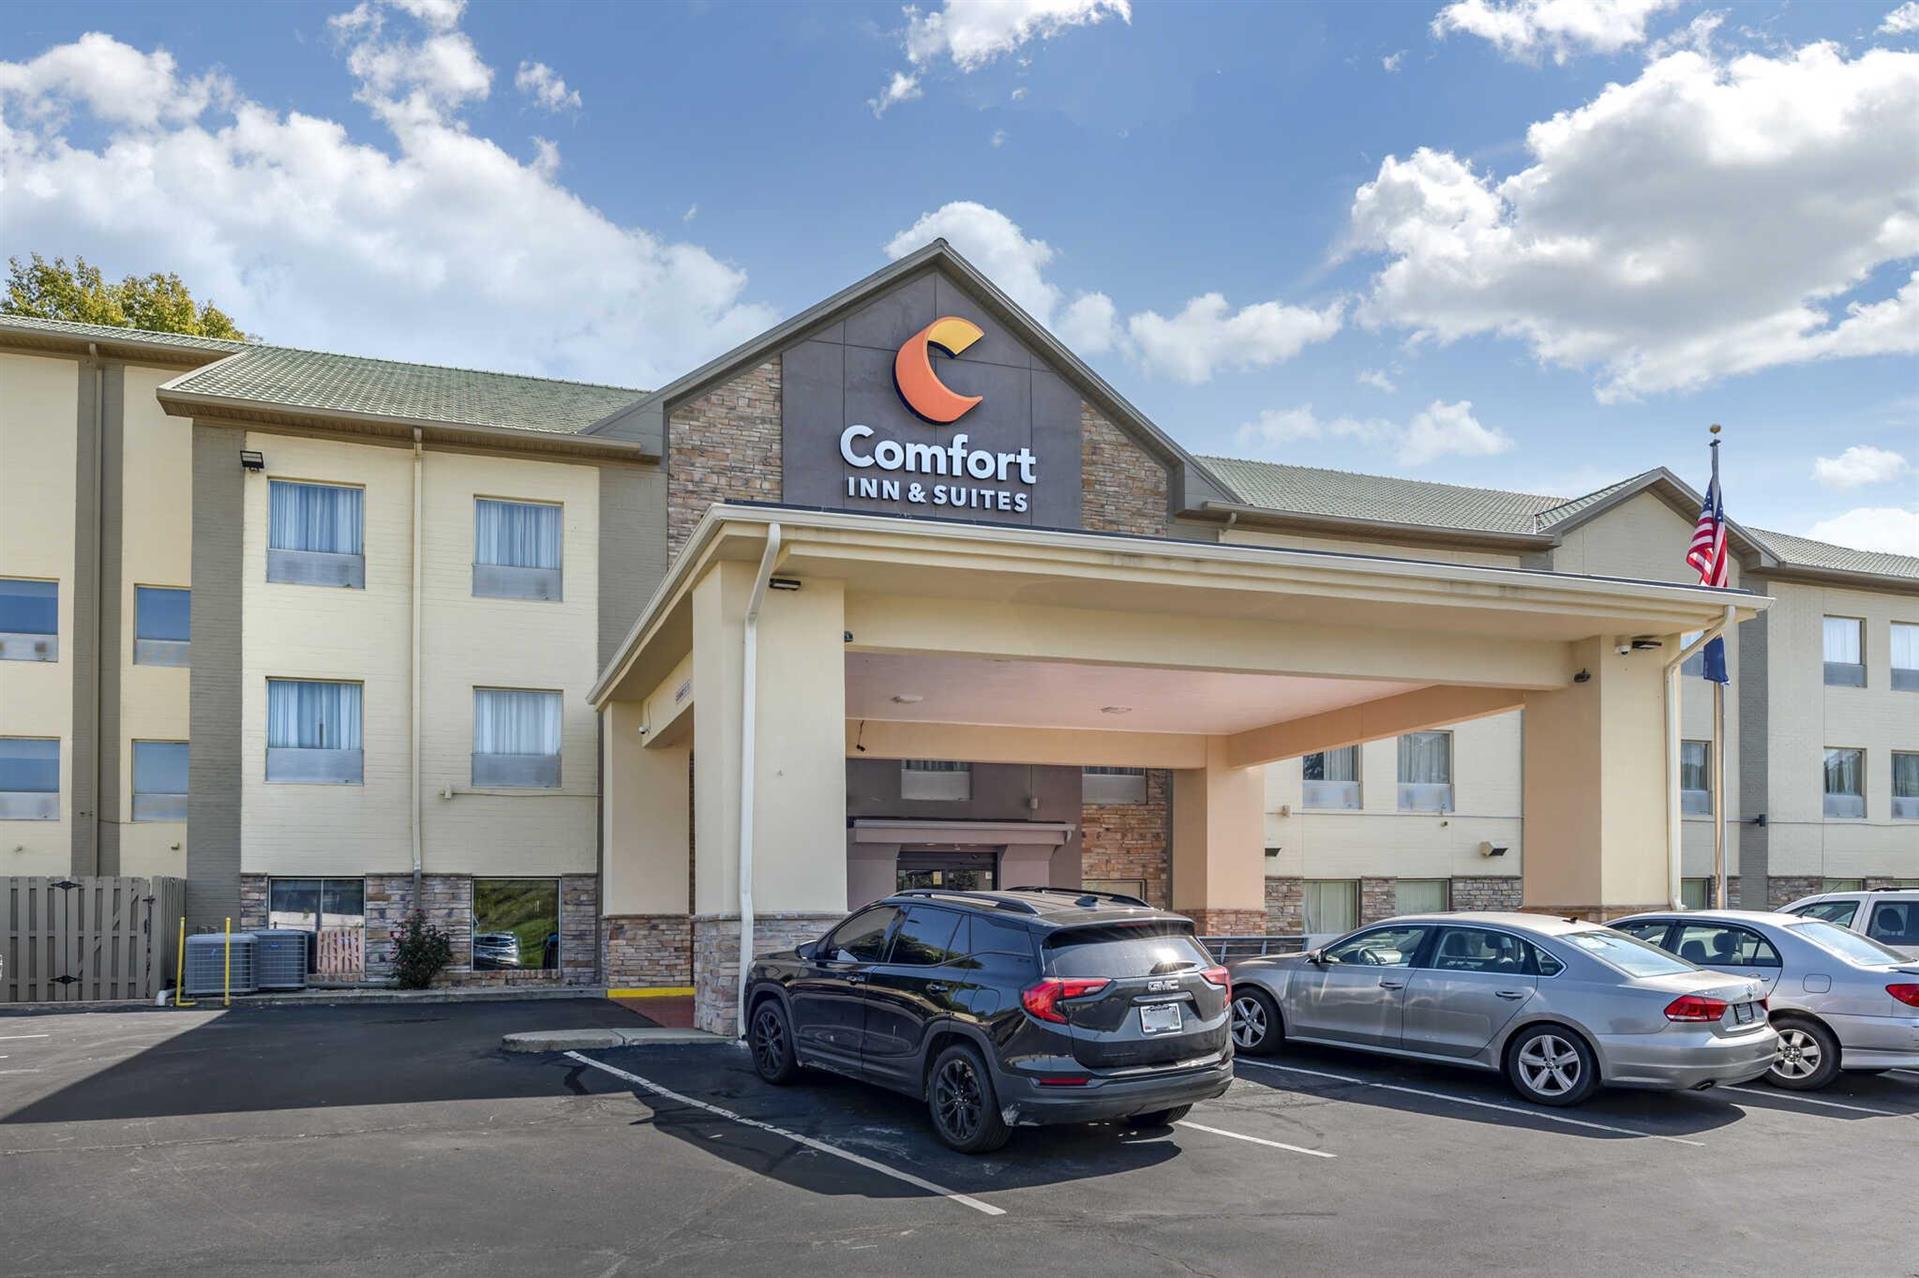 Comfort Inn & Suites - Cincinnati in Cincinnati, OH